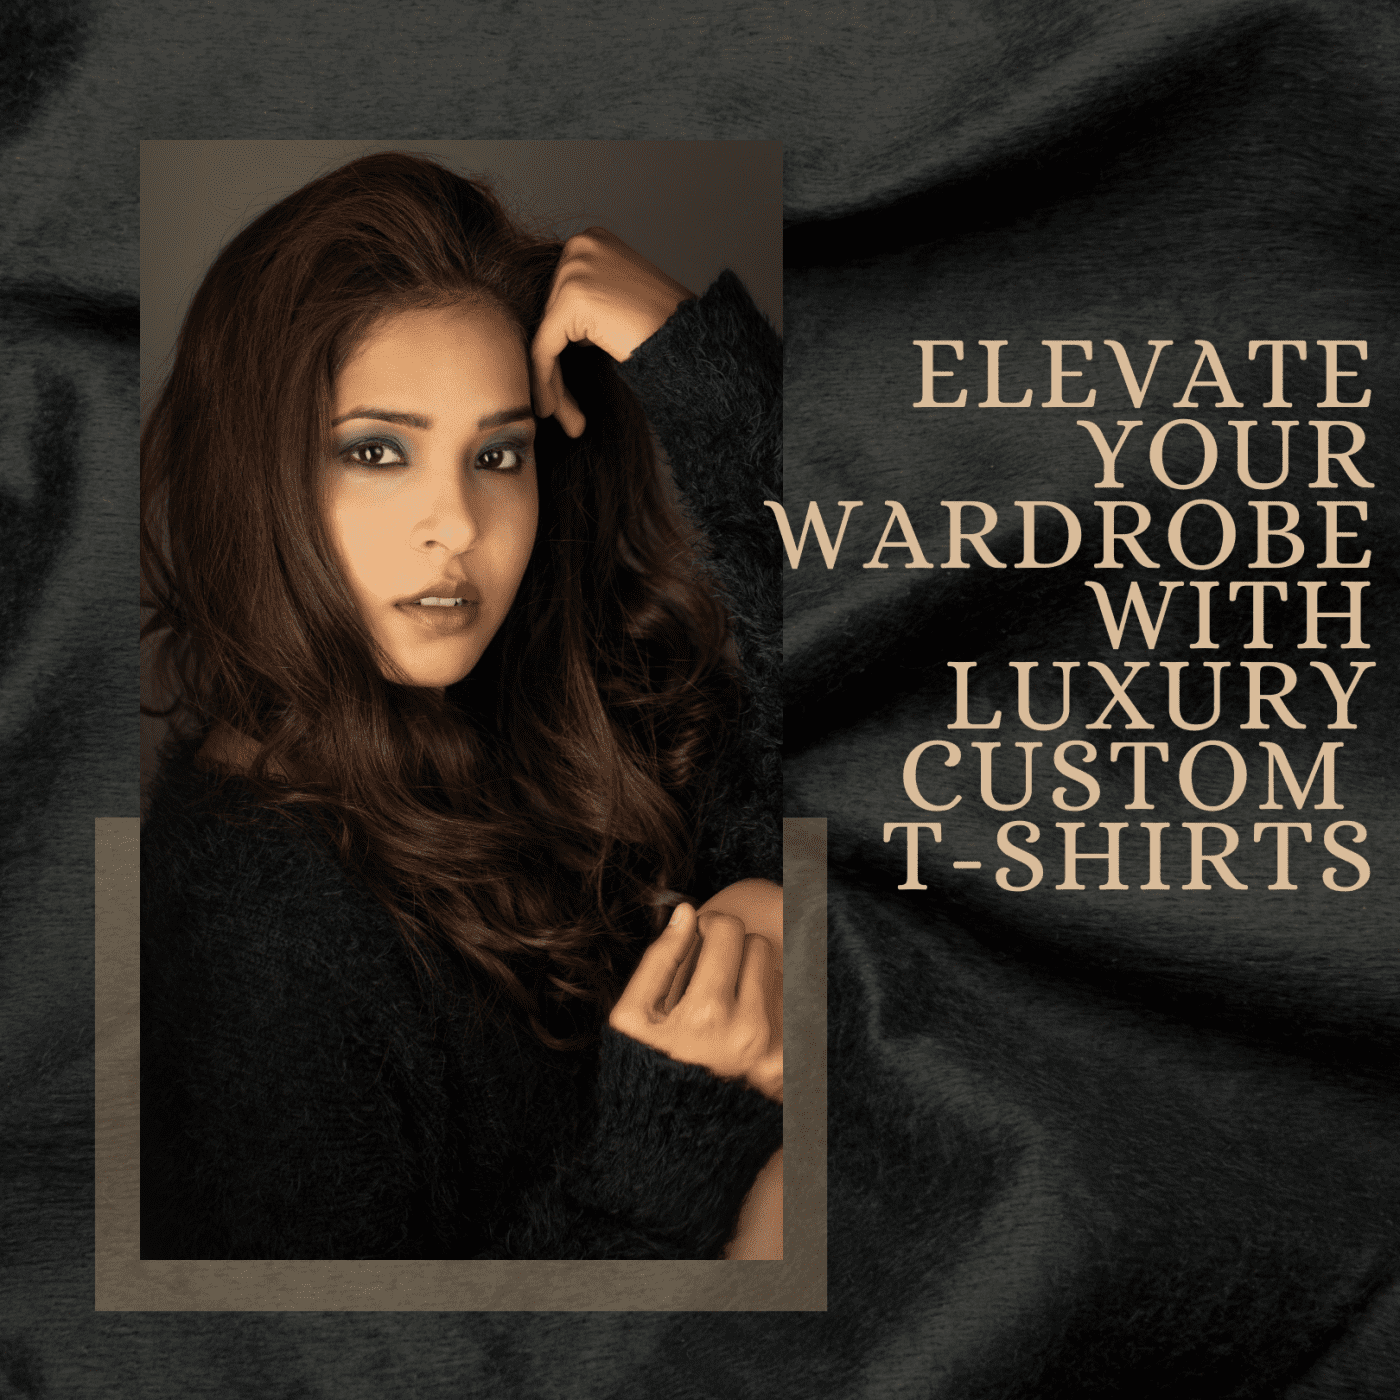 Elevate-Your-Wardrobe-with-Luxury-Custom-T-Shirts, custom t shirts, custom t-shirts, t-shirt printing, t shirt printing, tshirt printing, custom tshirt